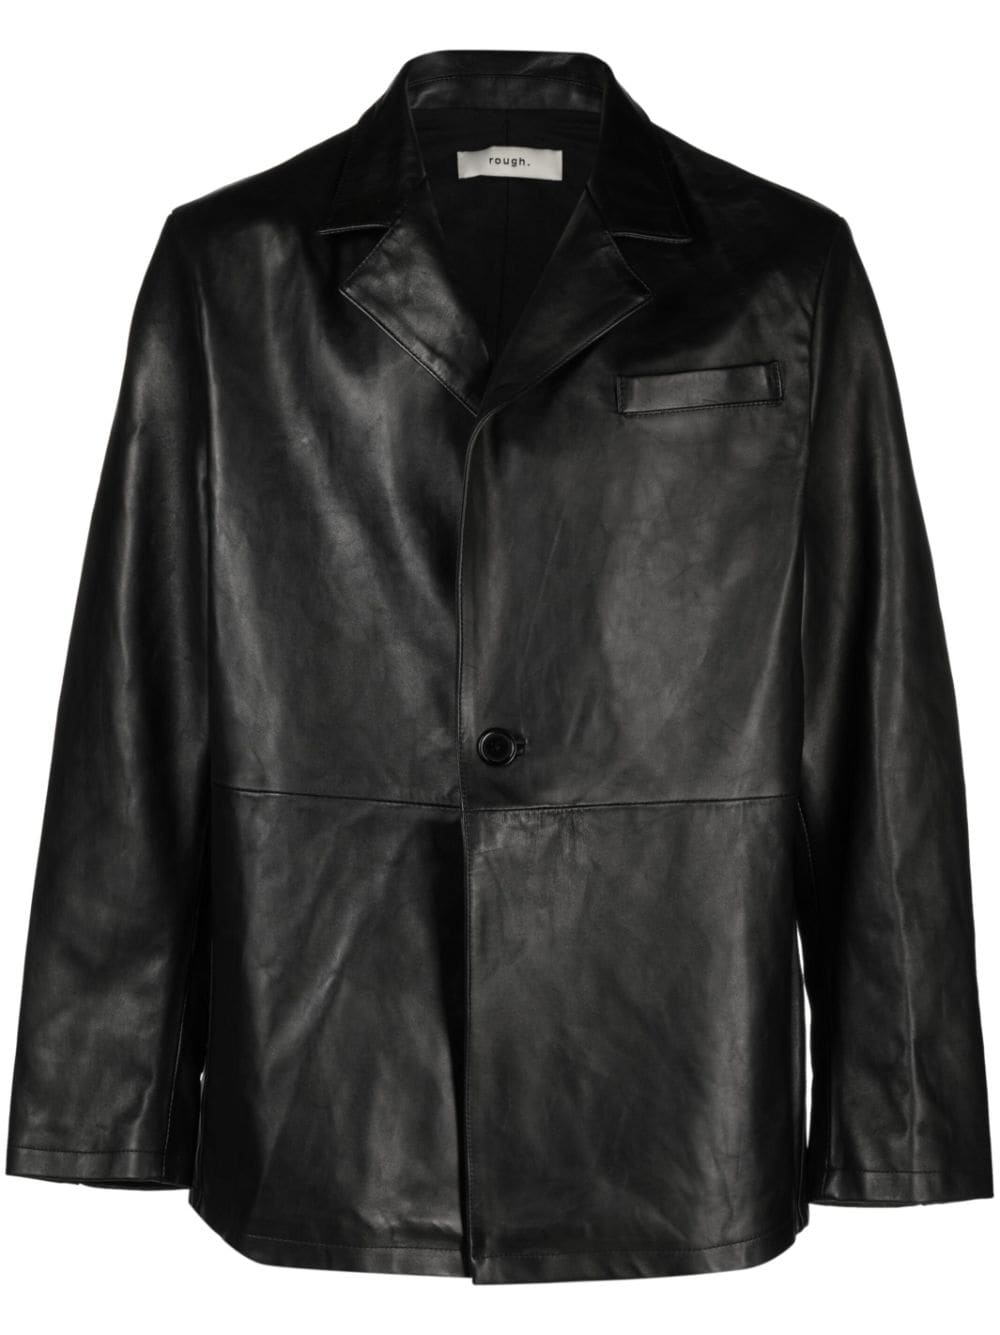 ROUGH. single-breasted leather jacket - Black